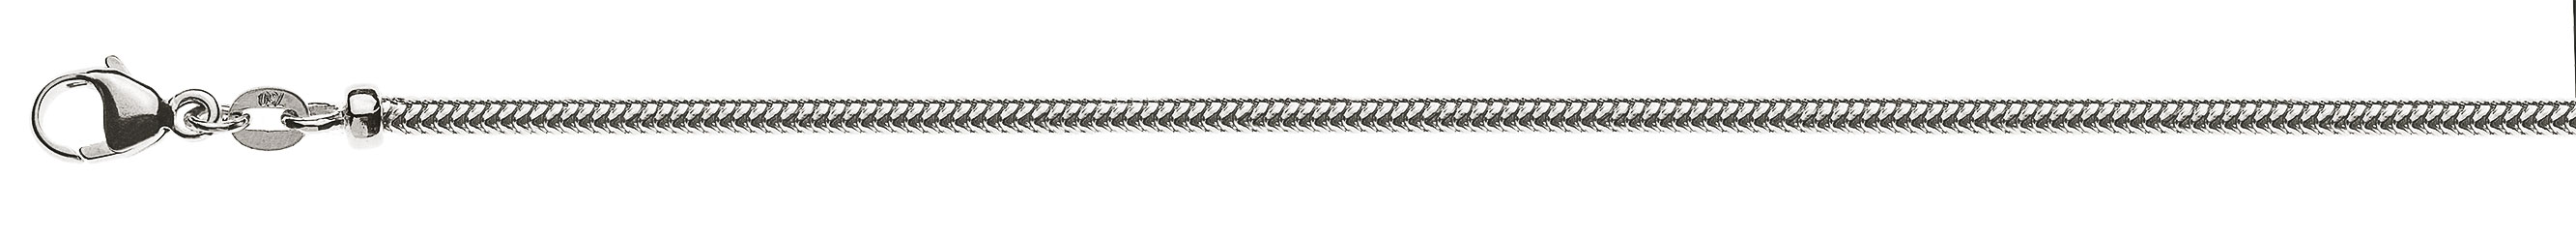 AURONOS Prestige Necklace white gold 18K snake chain 42cm 2.4mm